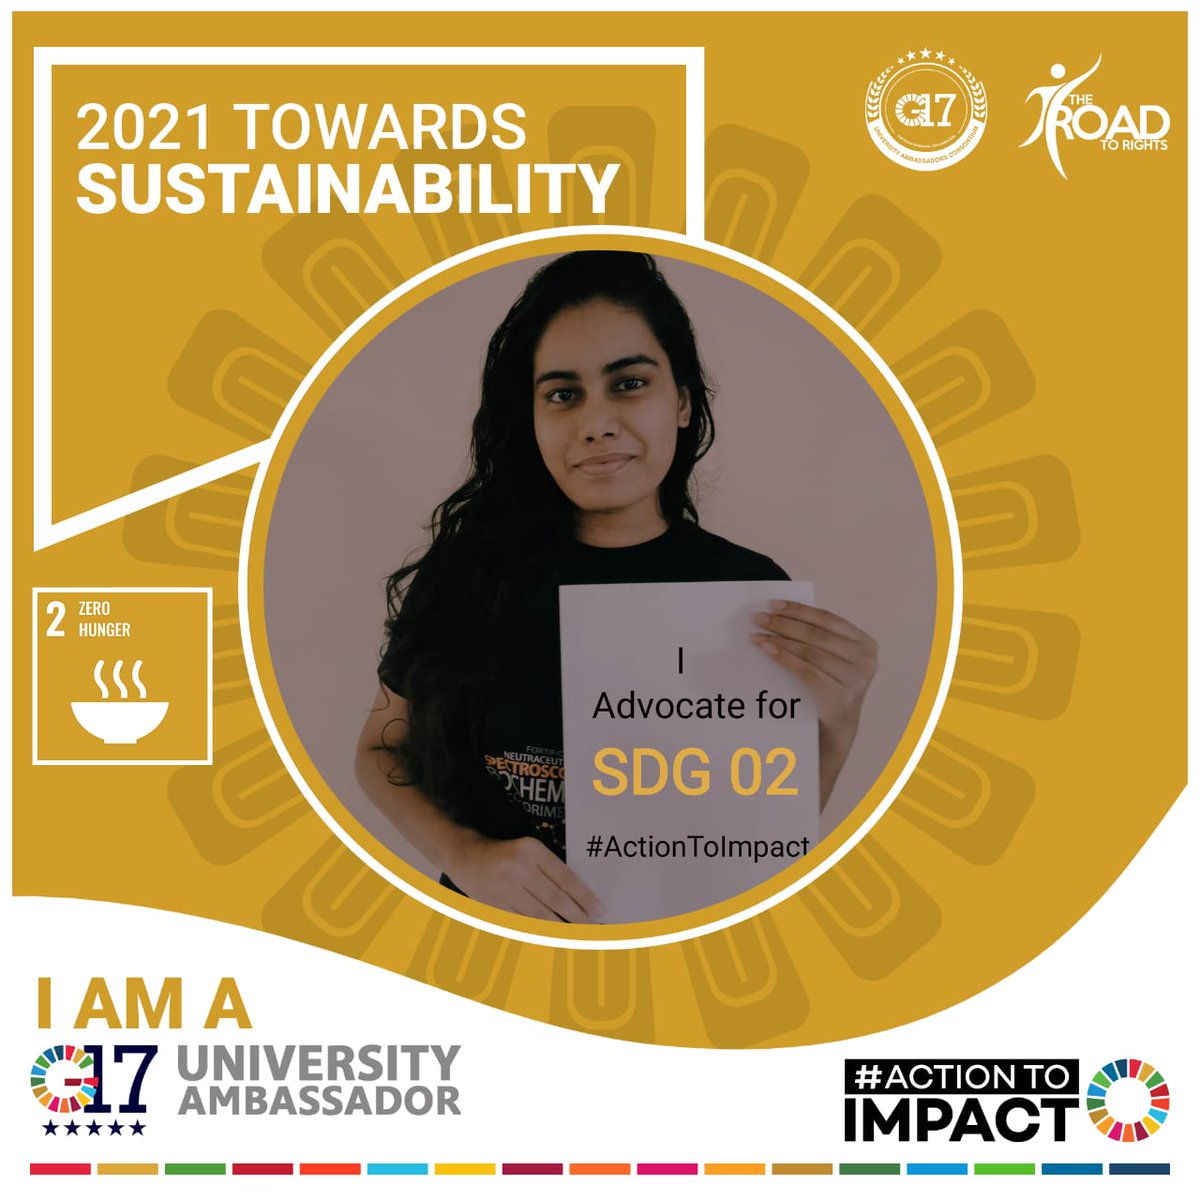 As a proud #G17 University Ambassador, I advocate for Sustainable Development Goals to make #SriLanka a #sustainable nation. Together #ActionToImpact

@road2rights  @g17uac @SriLanka2030 

#InternationalYouthDay2021 #YouthDay #Act4SDGs